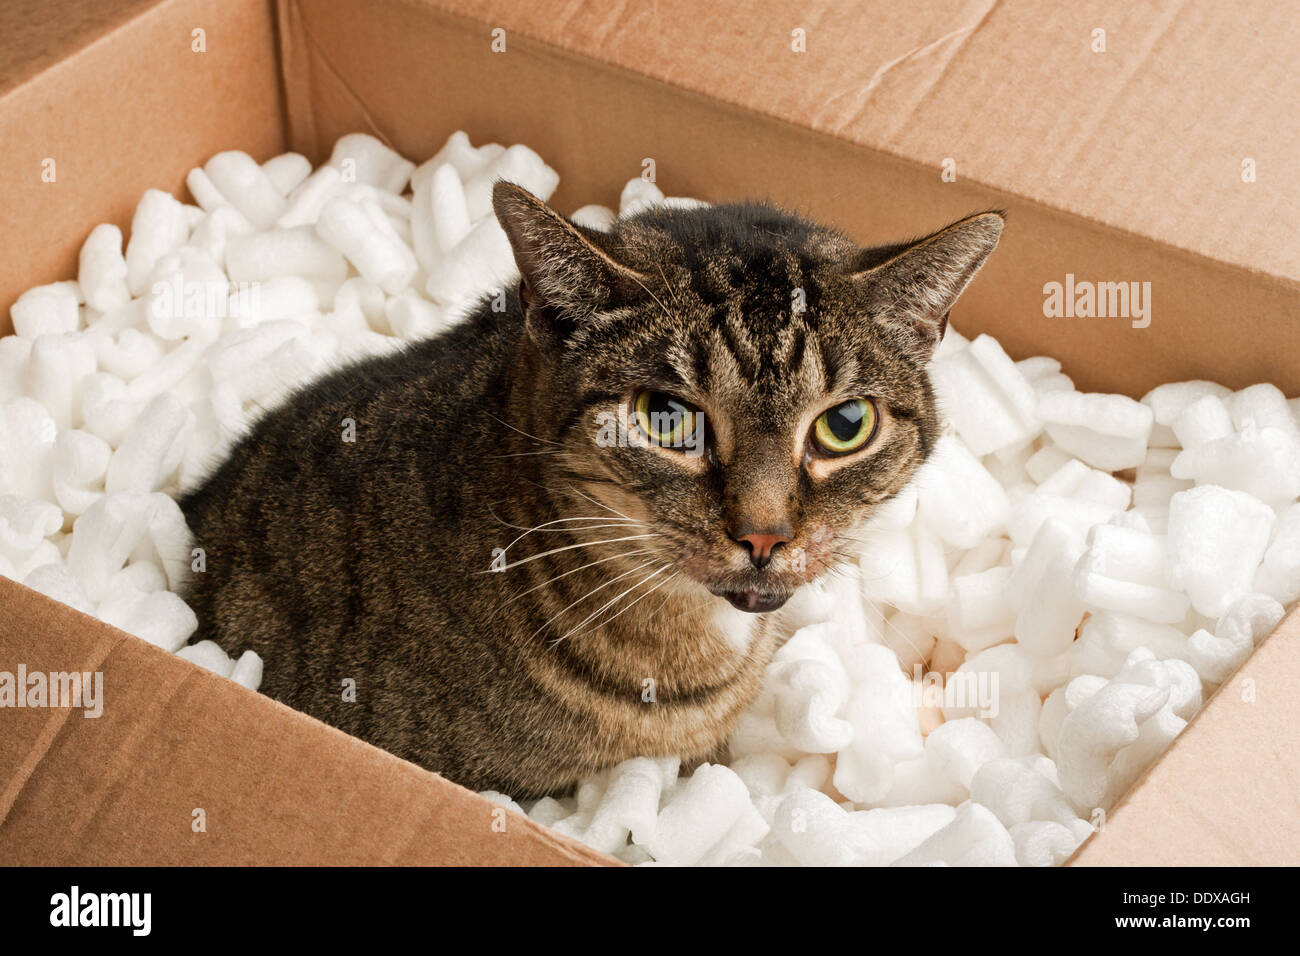 Verärgert Katze im Karton Verpackung Erdnüsse Stockfoto